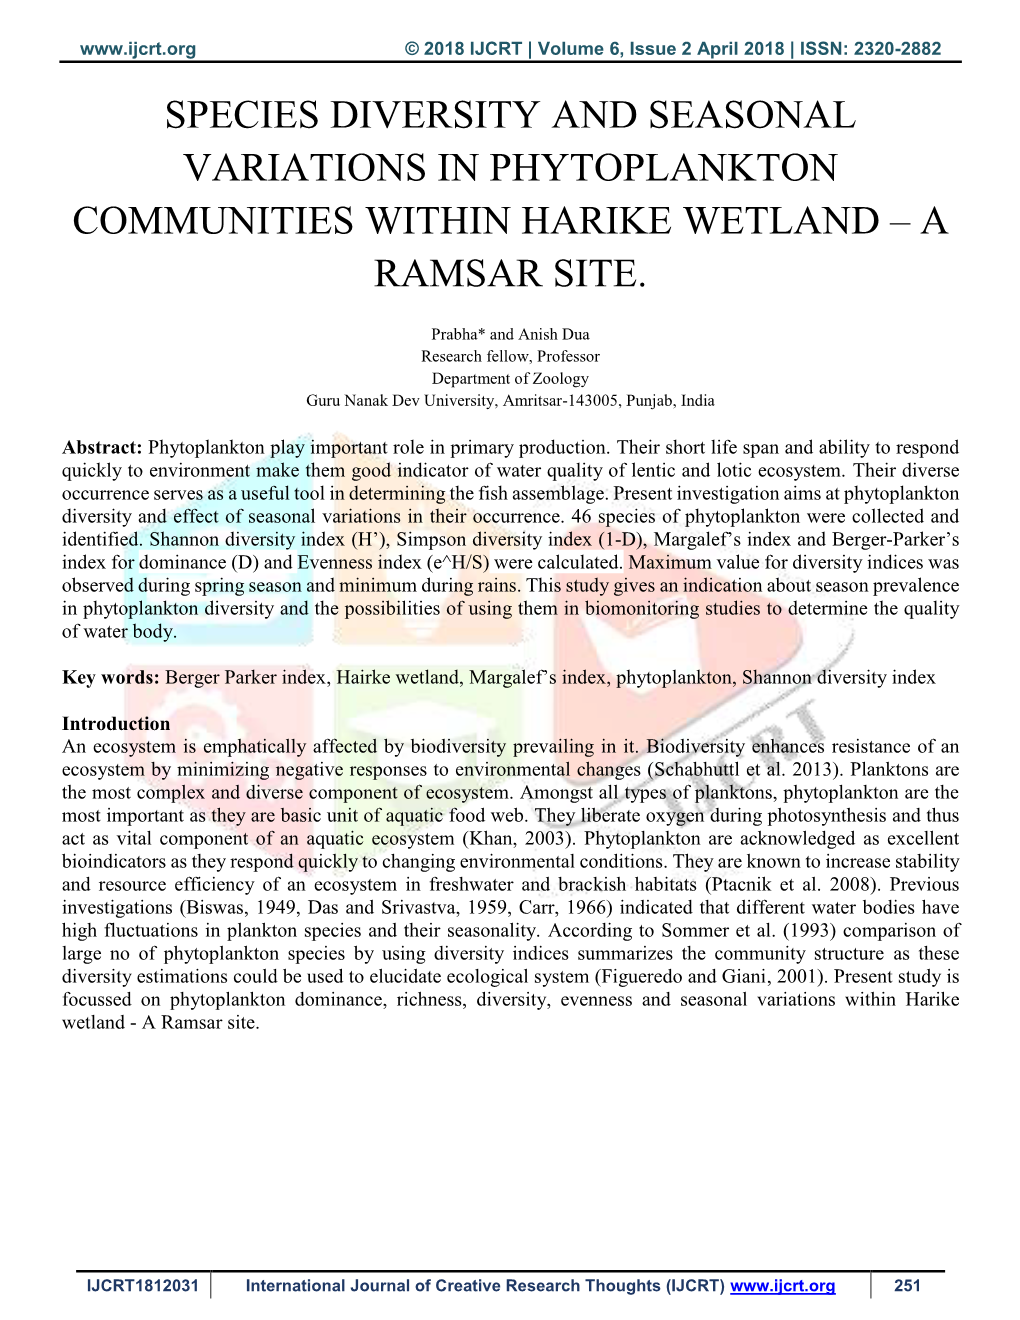 Species Diversity and Seasonal Variations in Phytoplankton Communities Within Harike Wetland – a Ramsar Site